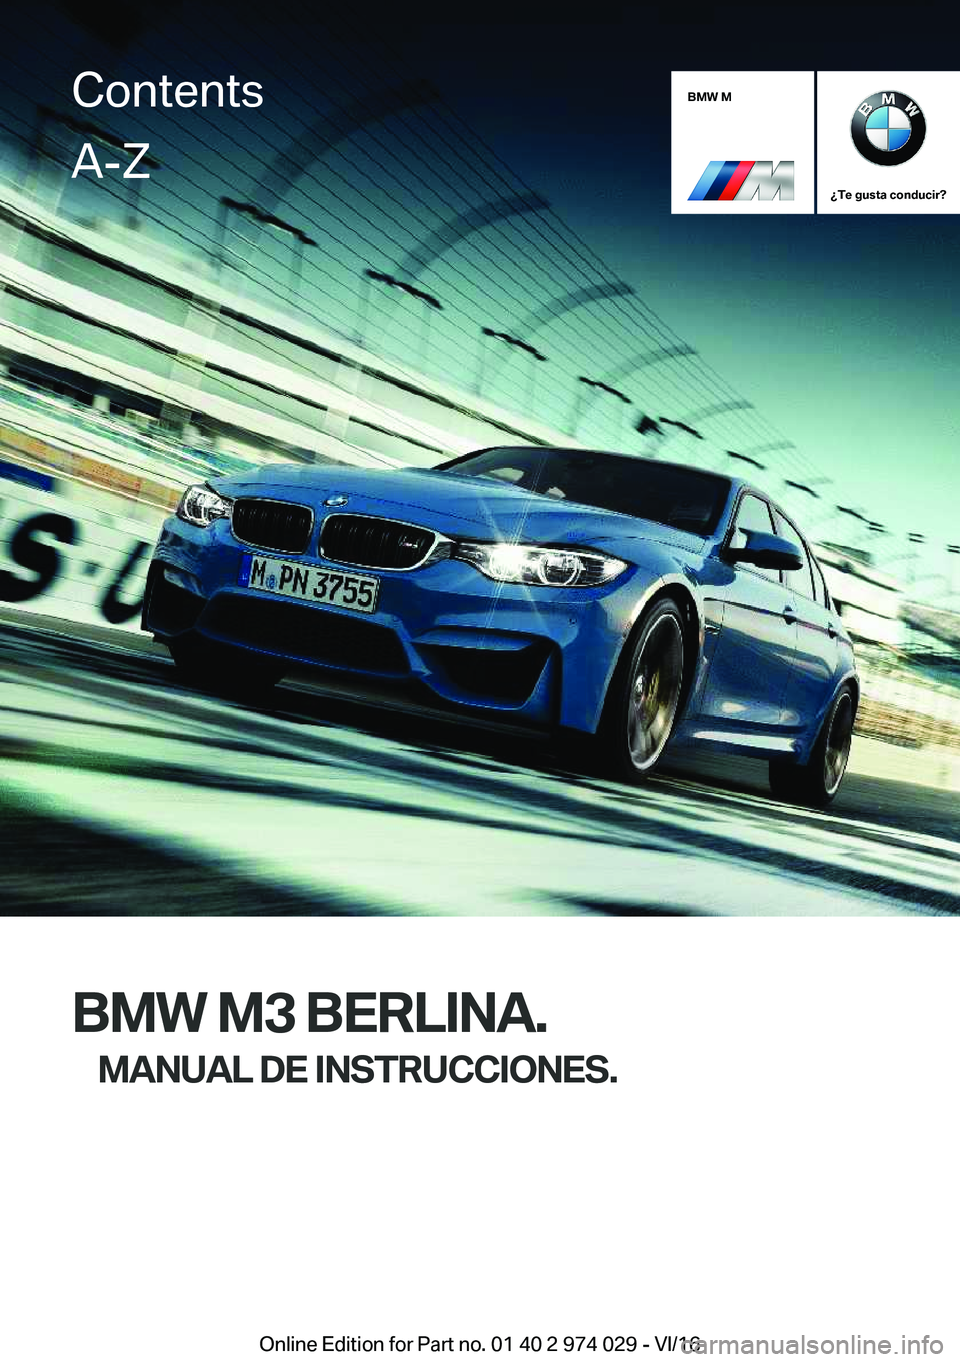 BMW M3 2017  Manuales de Empleo (in Spanish) �B�M�W��M
��T�e��g�u�s�t�a��c�o�n�d�u�c�i�r� 
�B�M�W��M�3��B�E�R�L�I�N�A�.�M�A�N�U�A�L��D�E��I�N�S�T�R�U�C�C�I�O�N�E�S�.
�C�o�n�t�e�n�t�s�A�-�Z
�O�n�l�i�n�e� �E�d�i�t�i�o�n� �f�o�r� �P�a�r�t� 